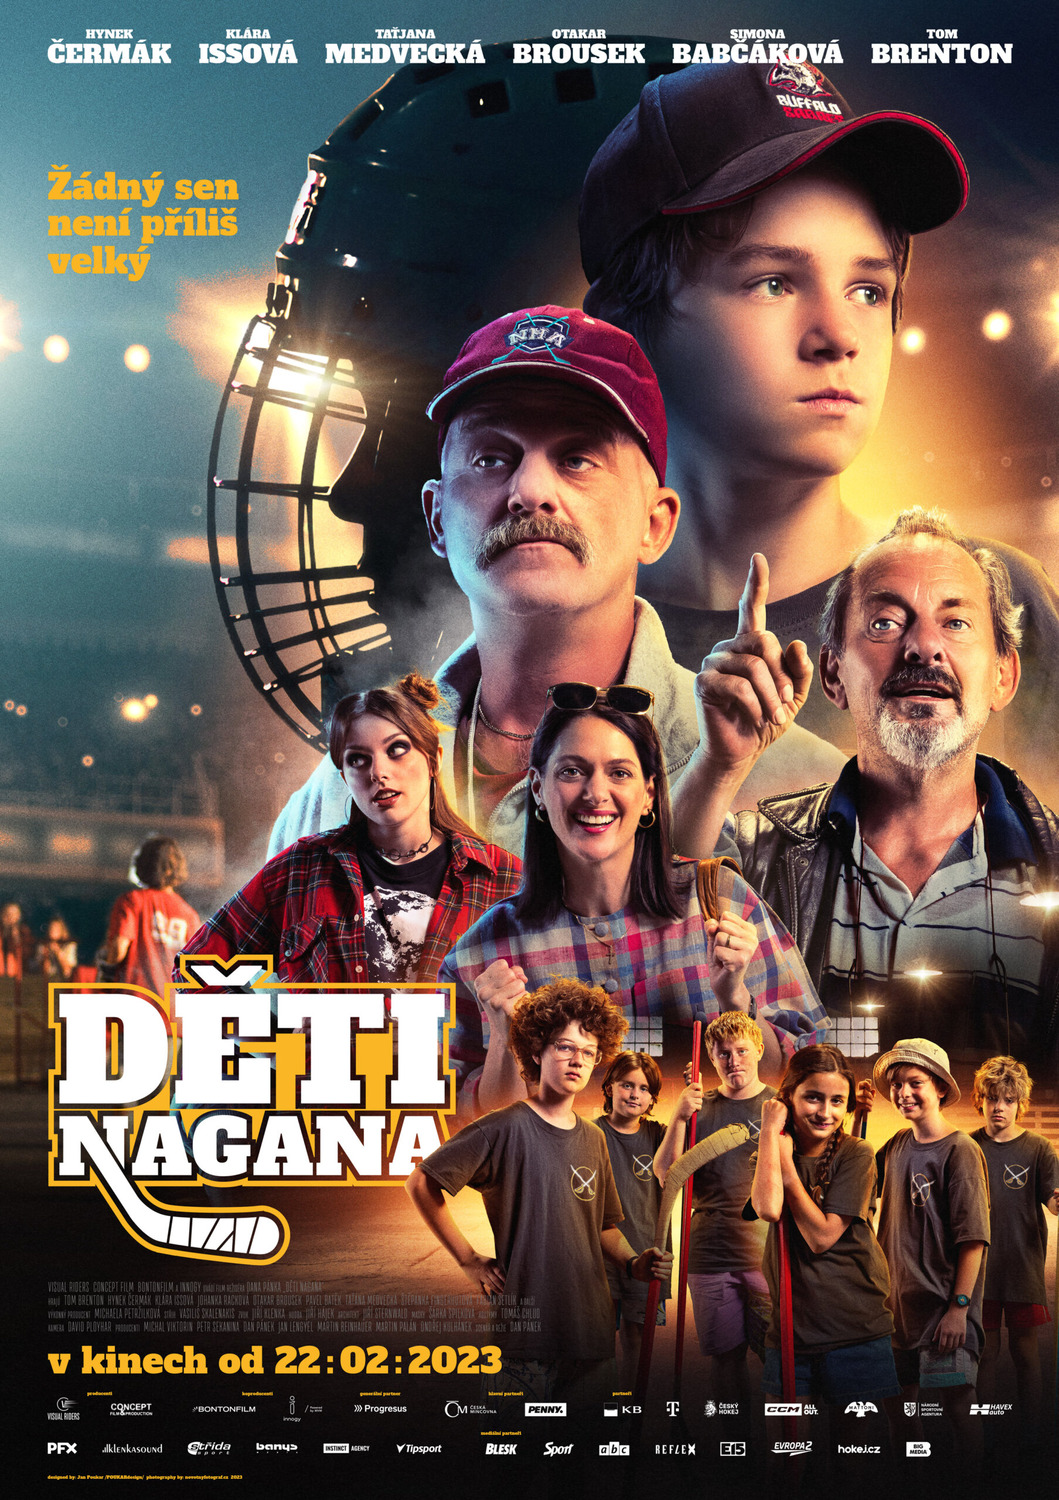 Extra Large Movie Poster Image for Deti Nagana 